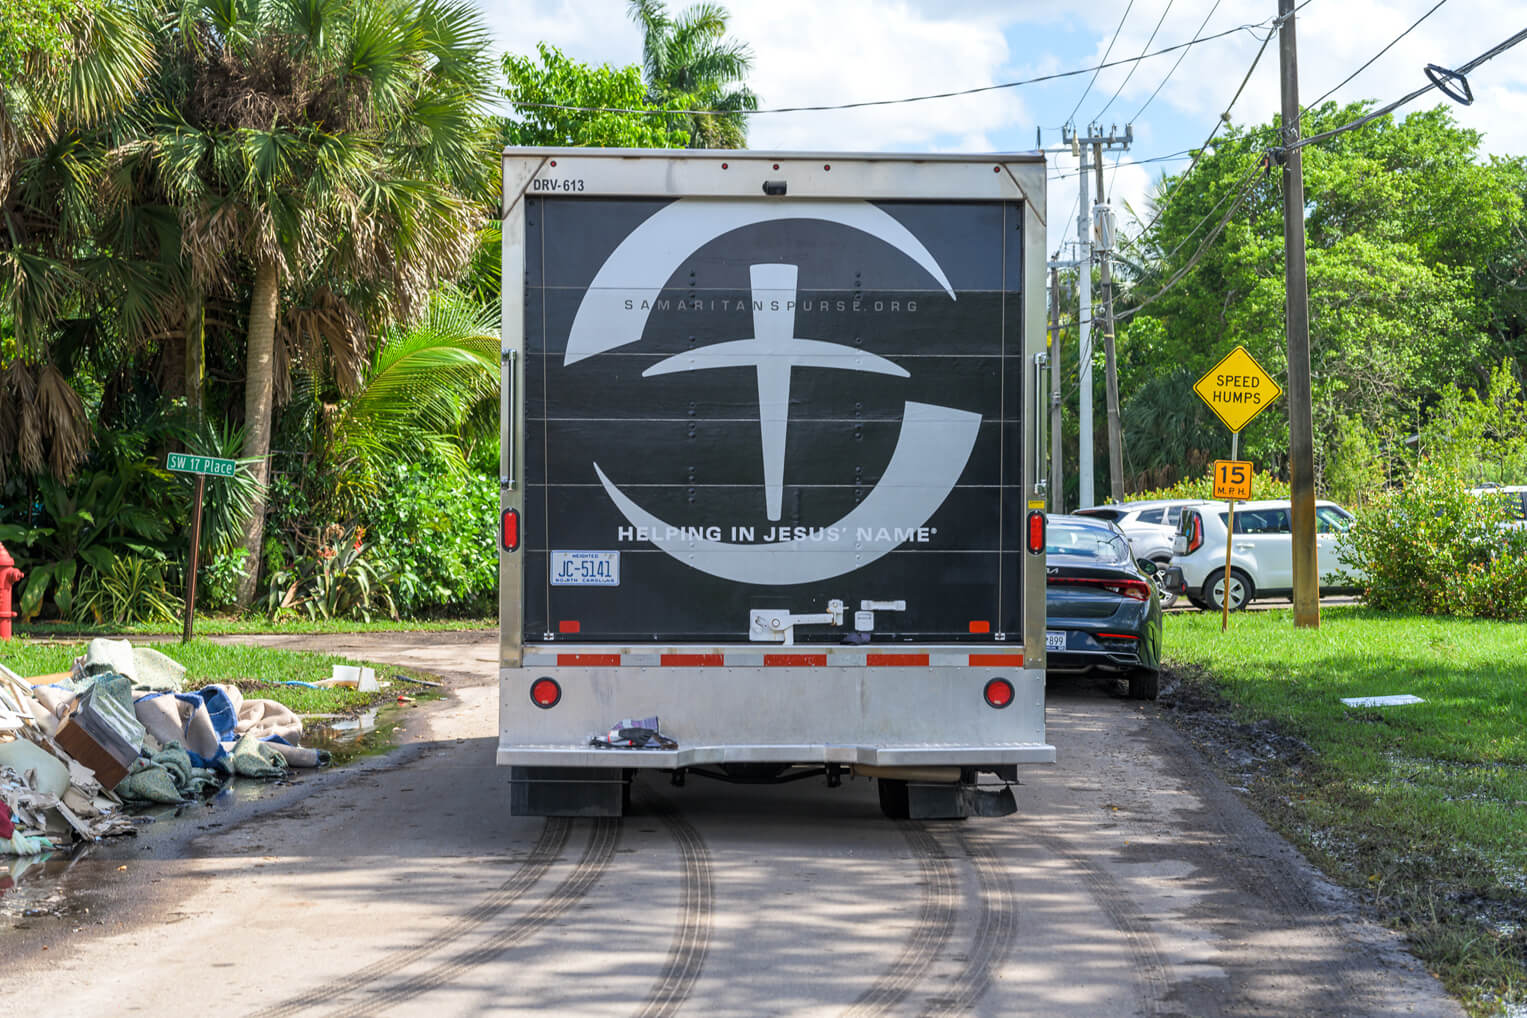 Image of USDR vehicle: Samaritan's Purse is helping in Jesus' Name in Fort Lauderdale.